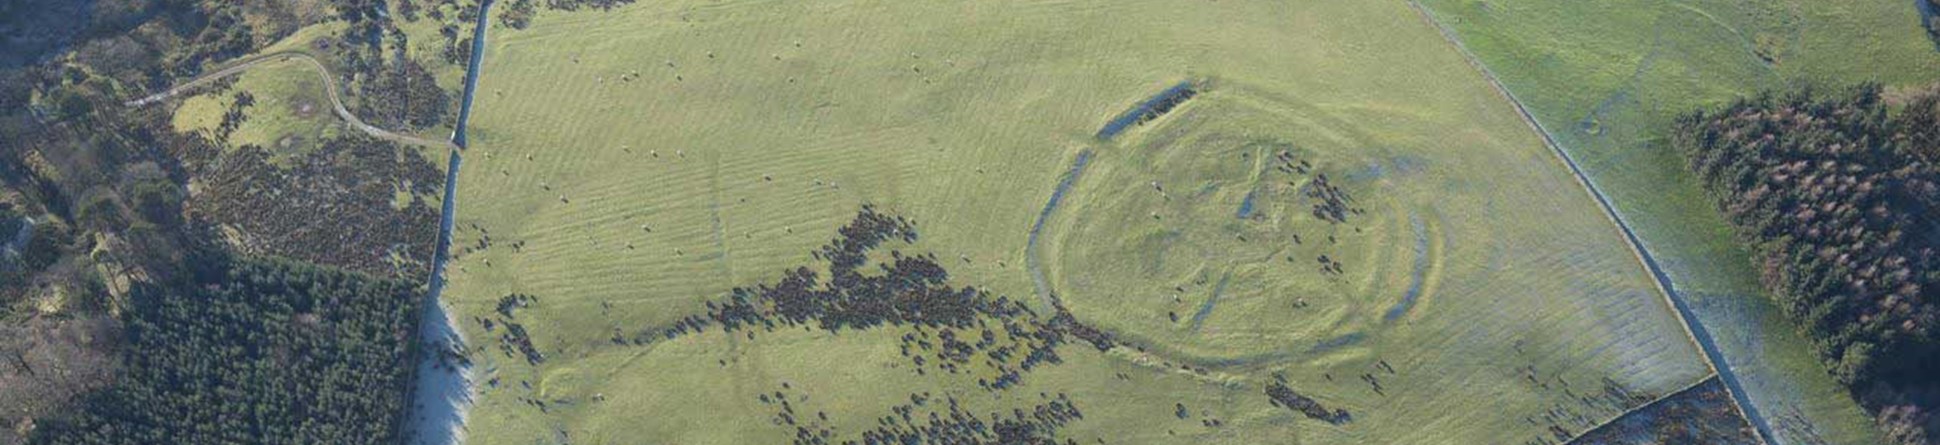 An aerial photograph of a circular enclosure on a hilltop seen as earthworks.